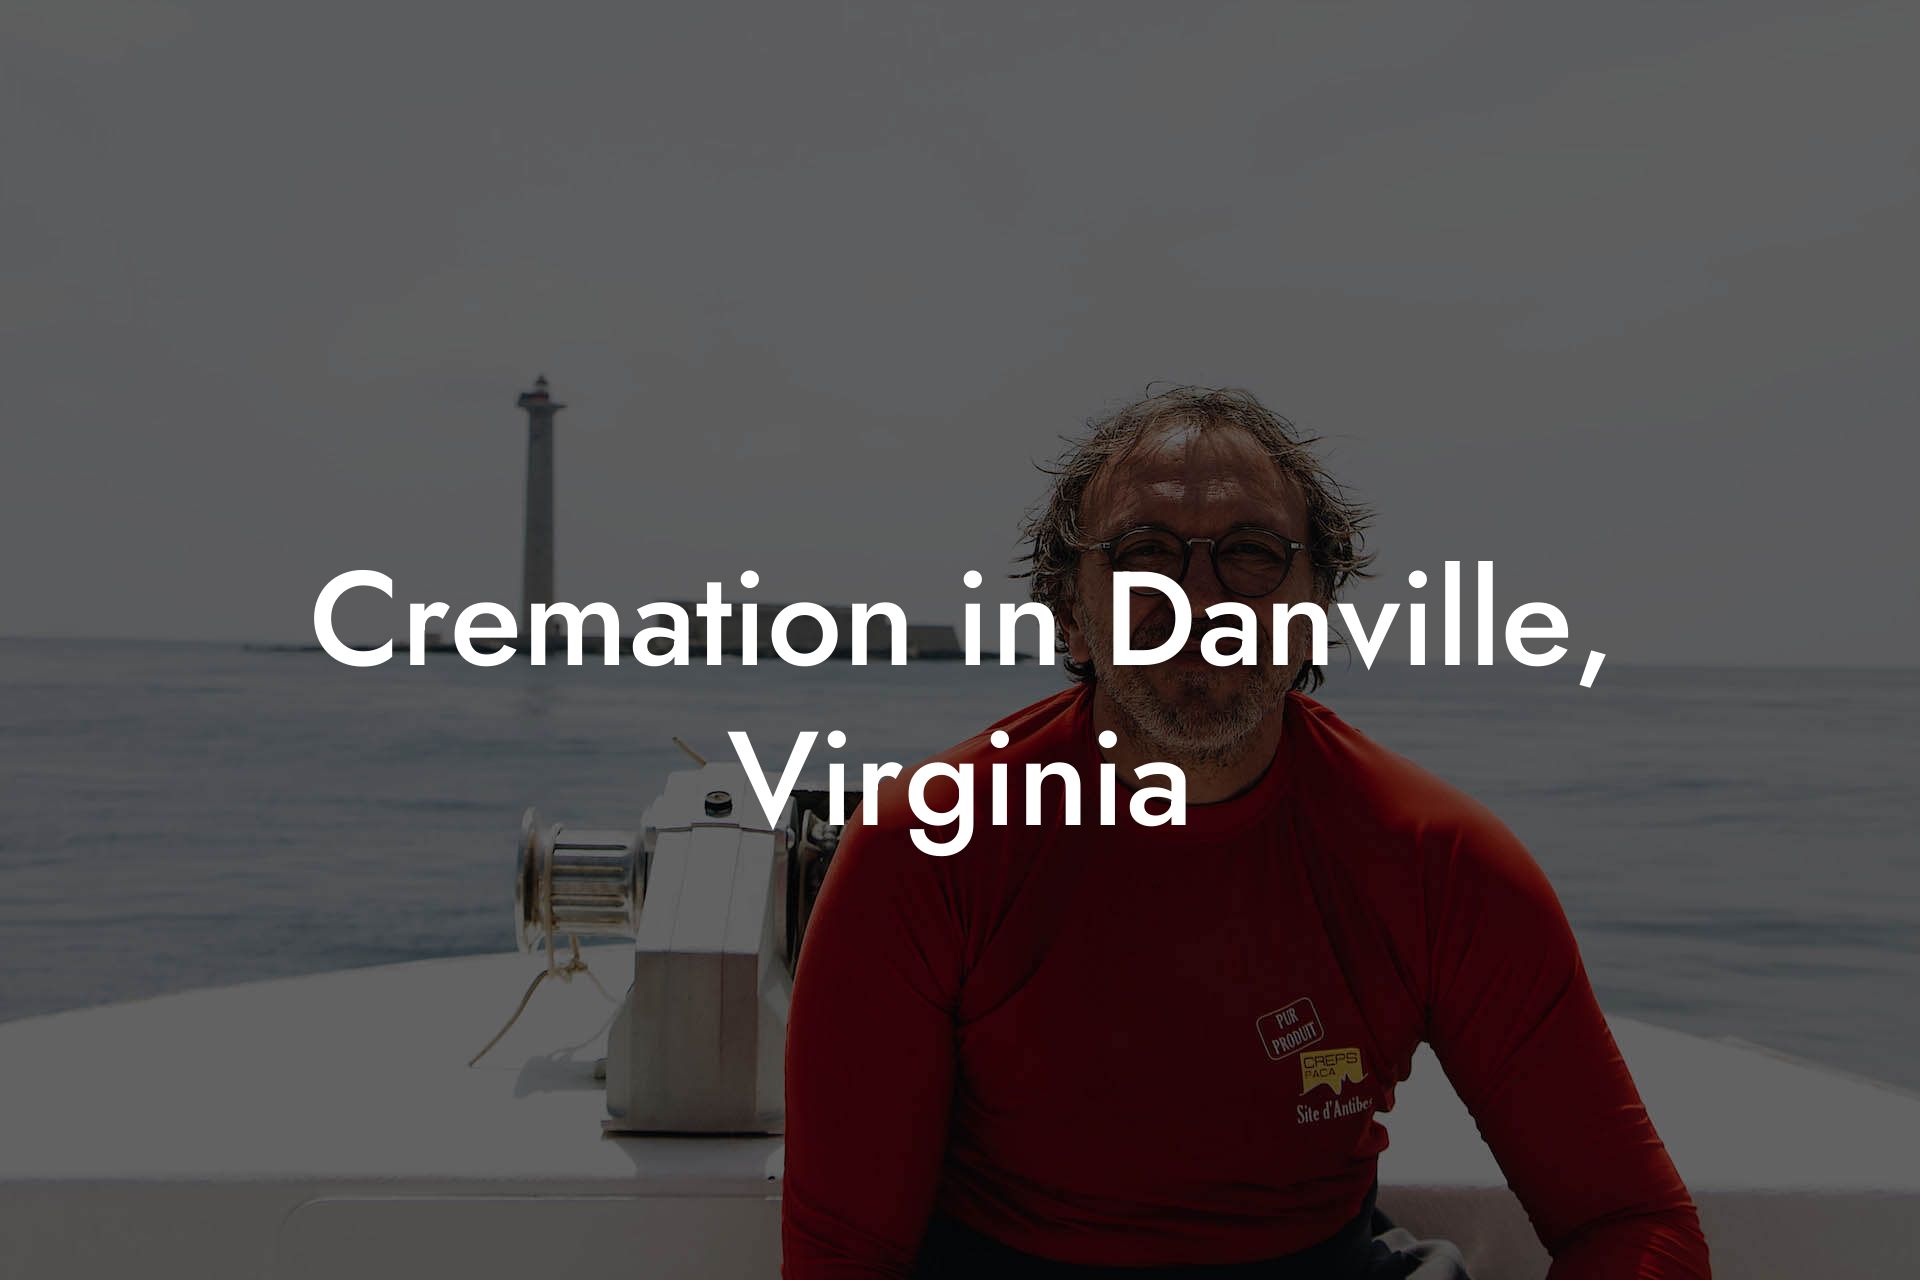 Cremation in Danville, Virginia